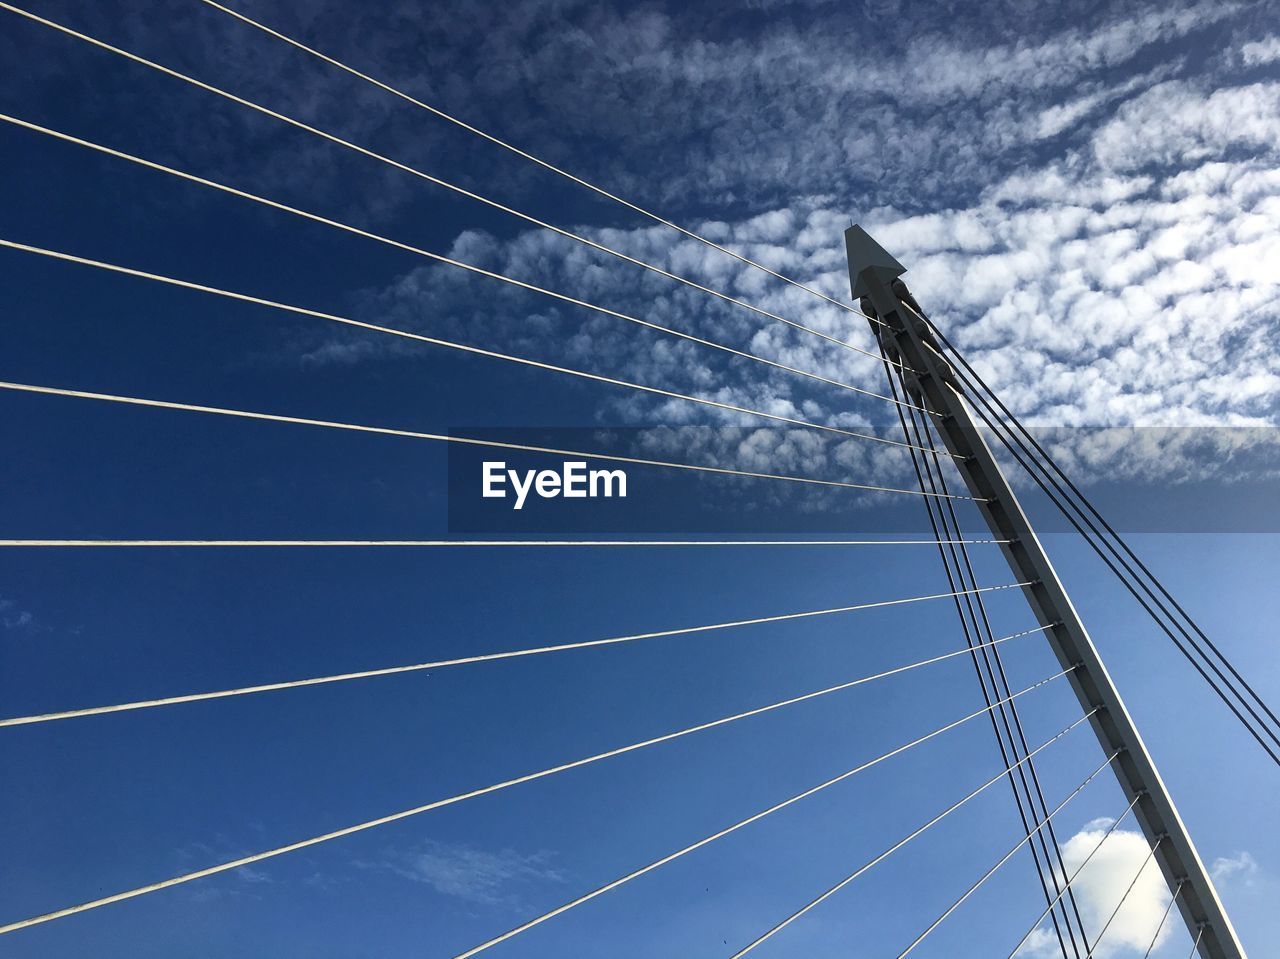 Low angle view of samuel beckett bridge against blue sky